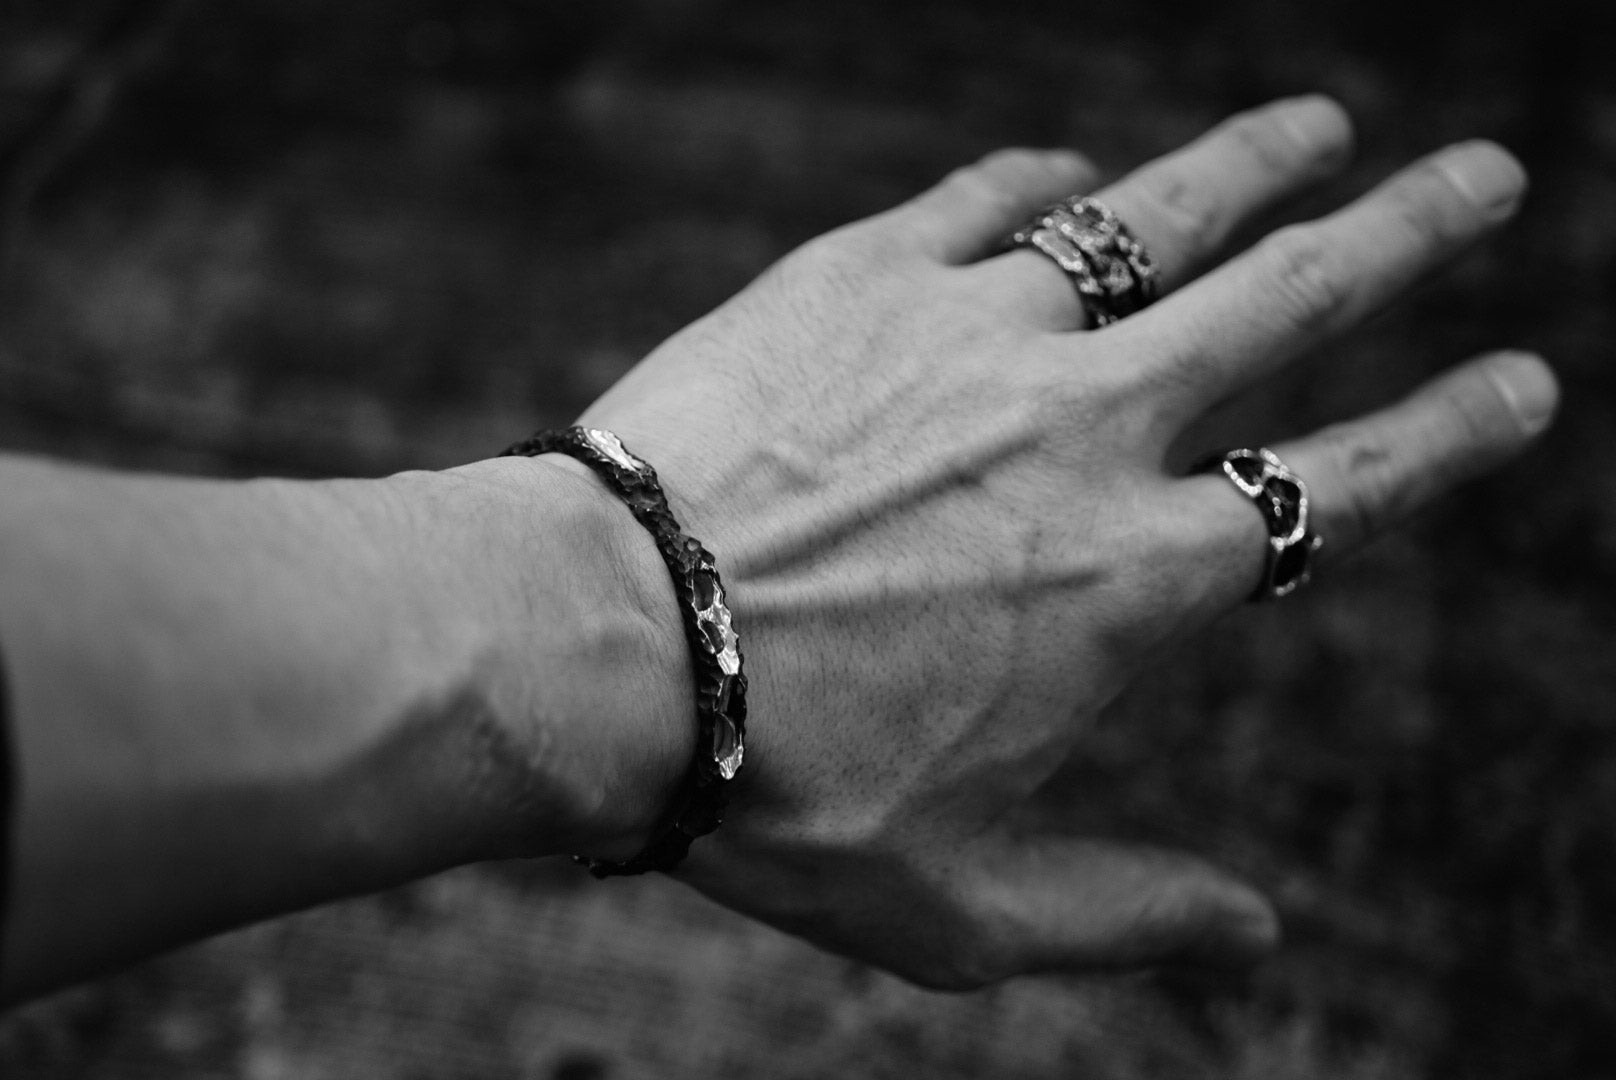 erosion - sterling silver bracelet